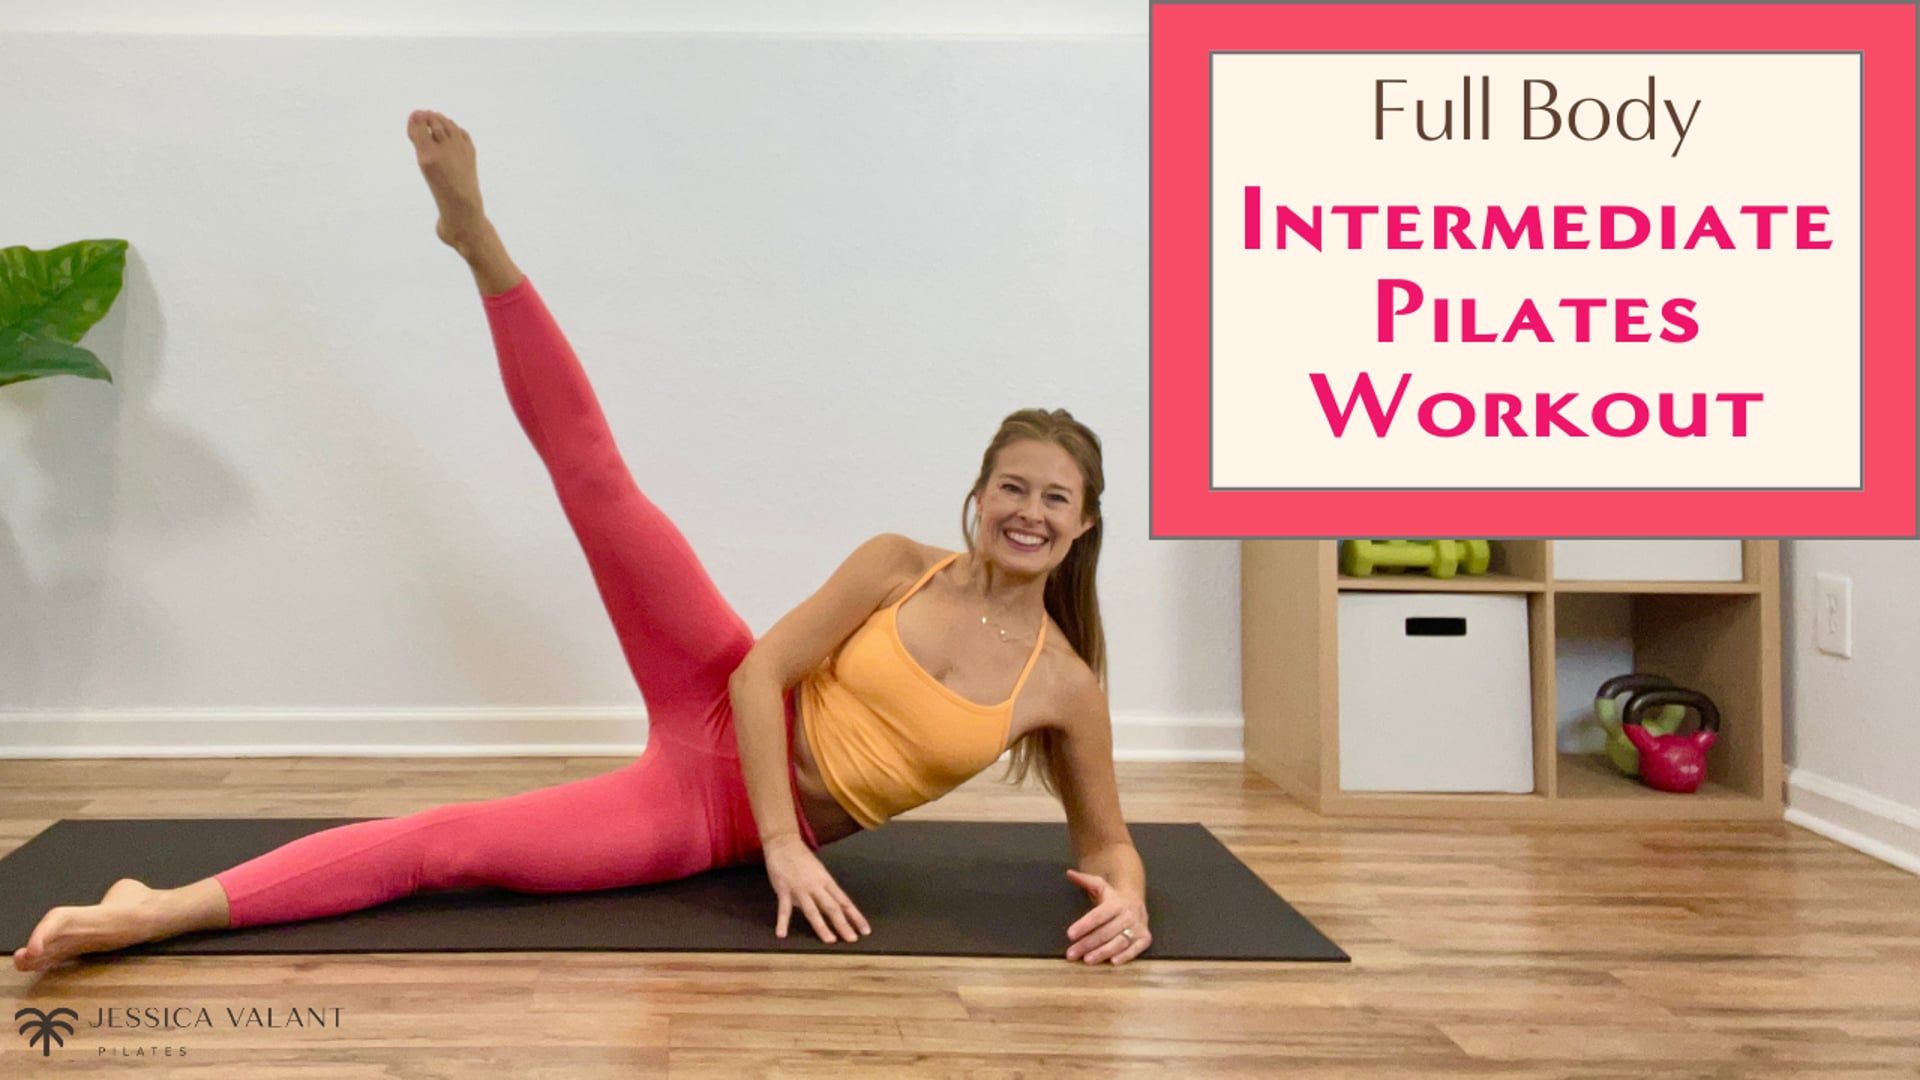 Full Body Intermediate Pilates Workout - Jessica Valant Pilates